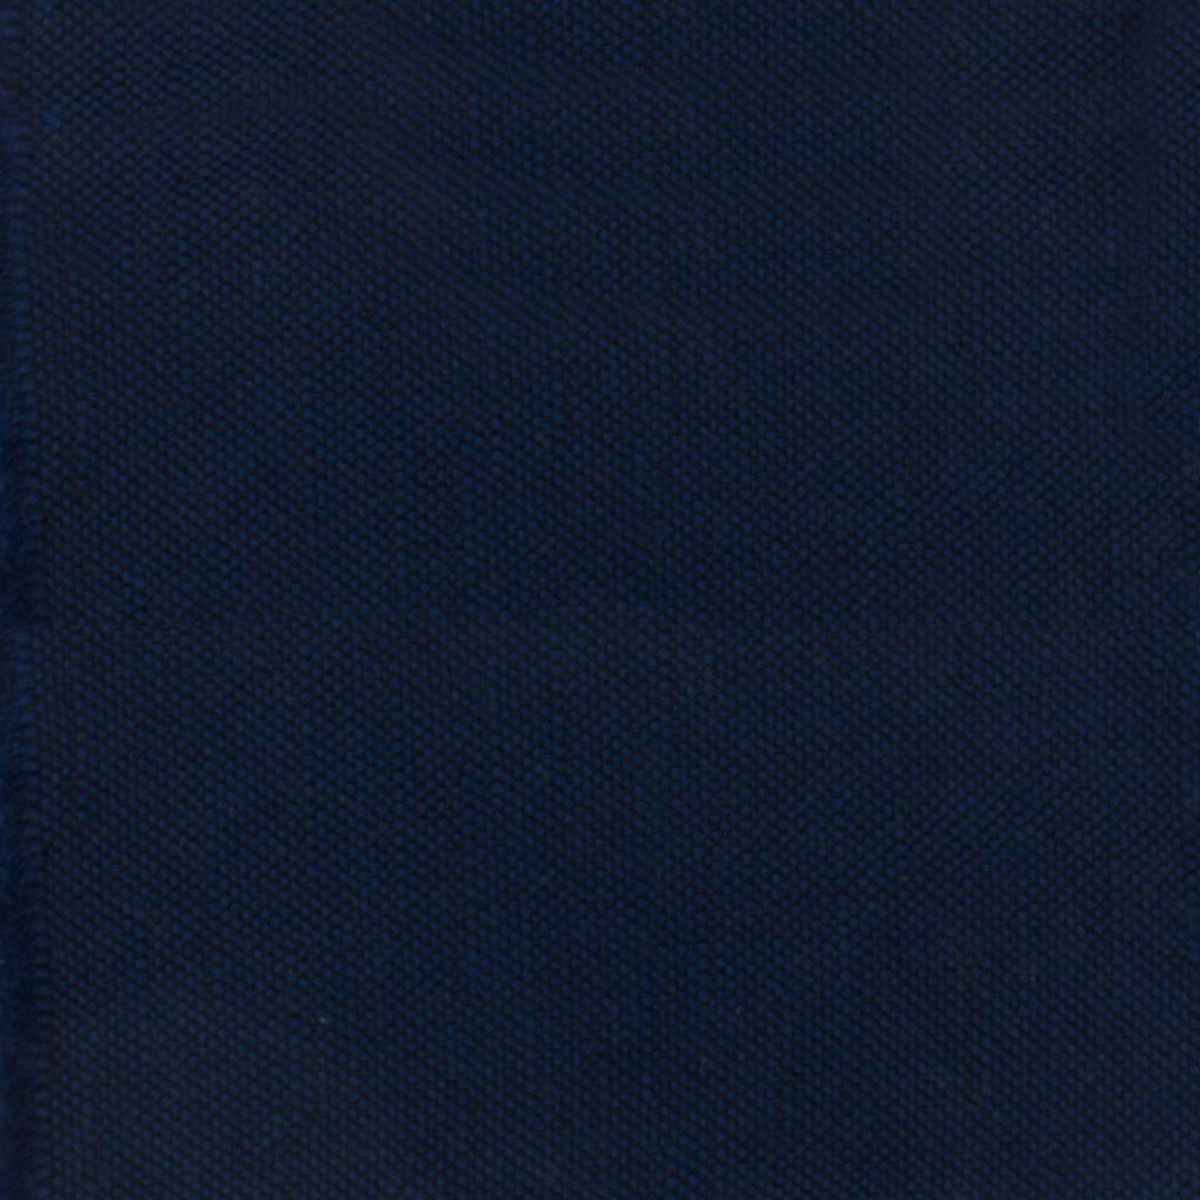 linen indigo cushion for croquet teak lounge chair thumbnail image